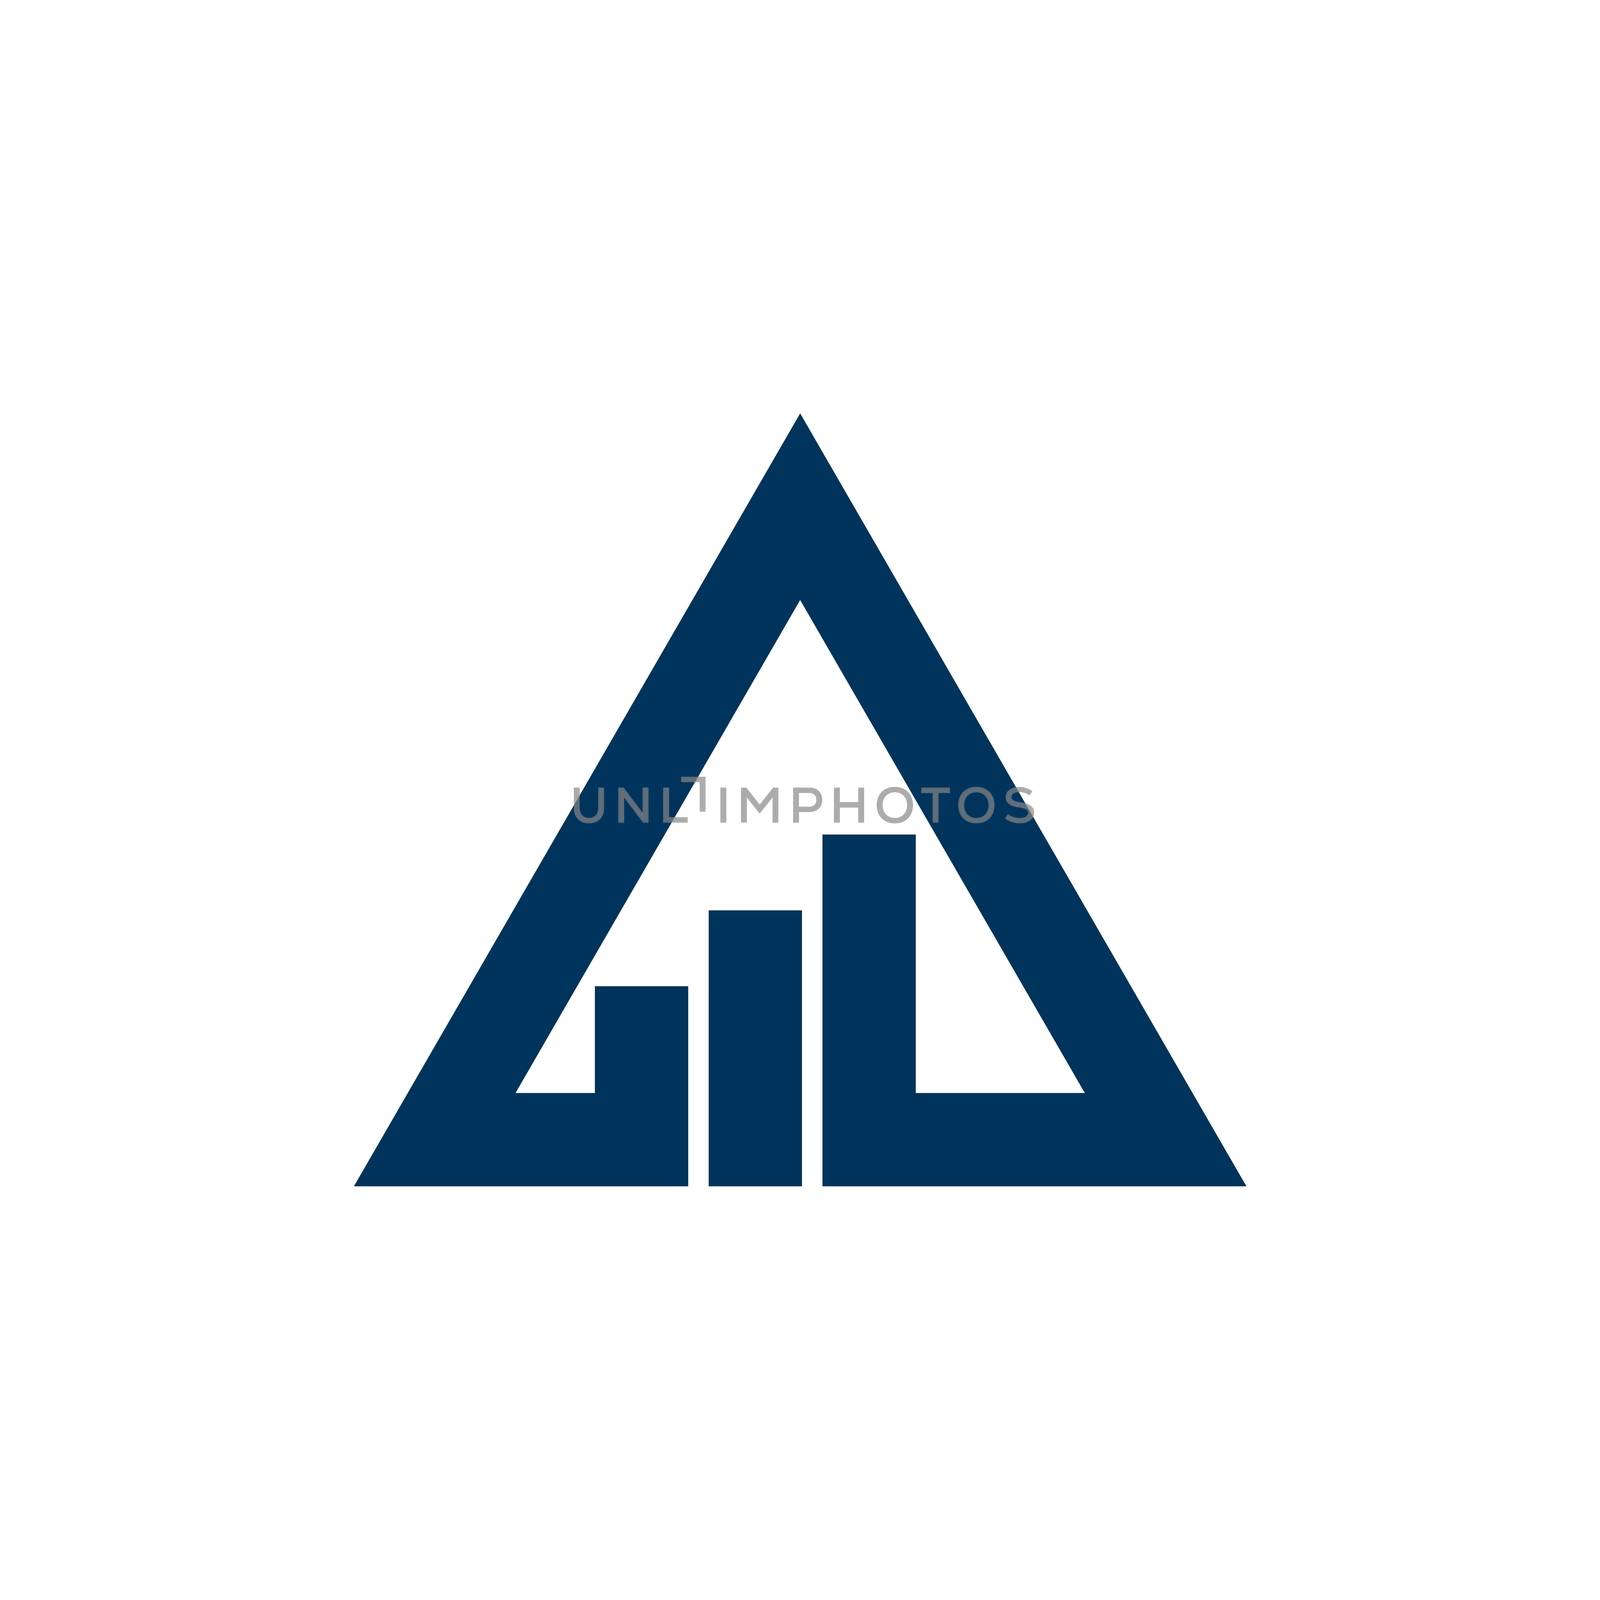 Blue Triangle Stock Exchange Logo Template Illustration Design. Vector EPS 10.